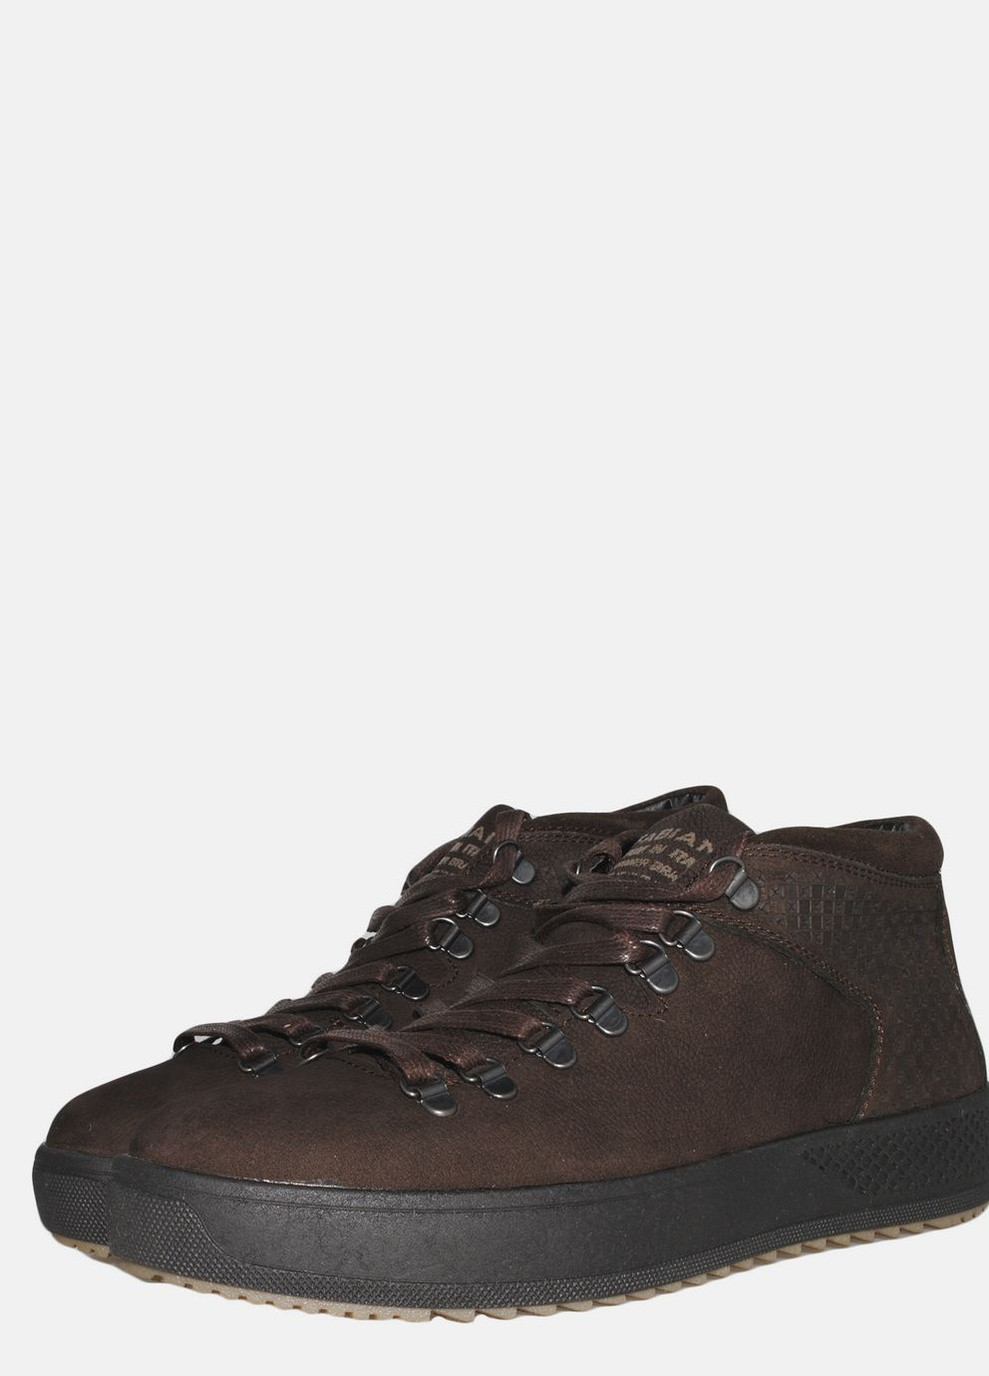 Коричневые зимние ботинки 903кор.н.черн коричневый Fabiani